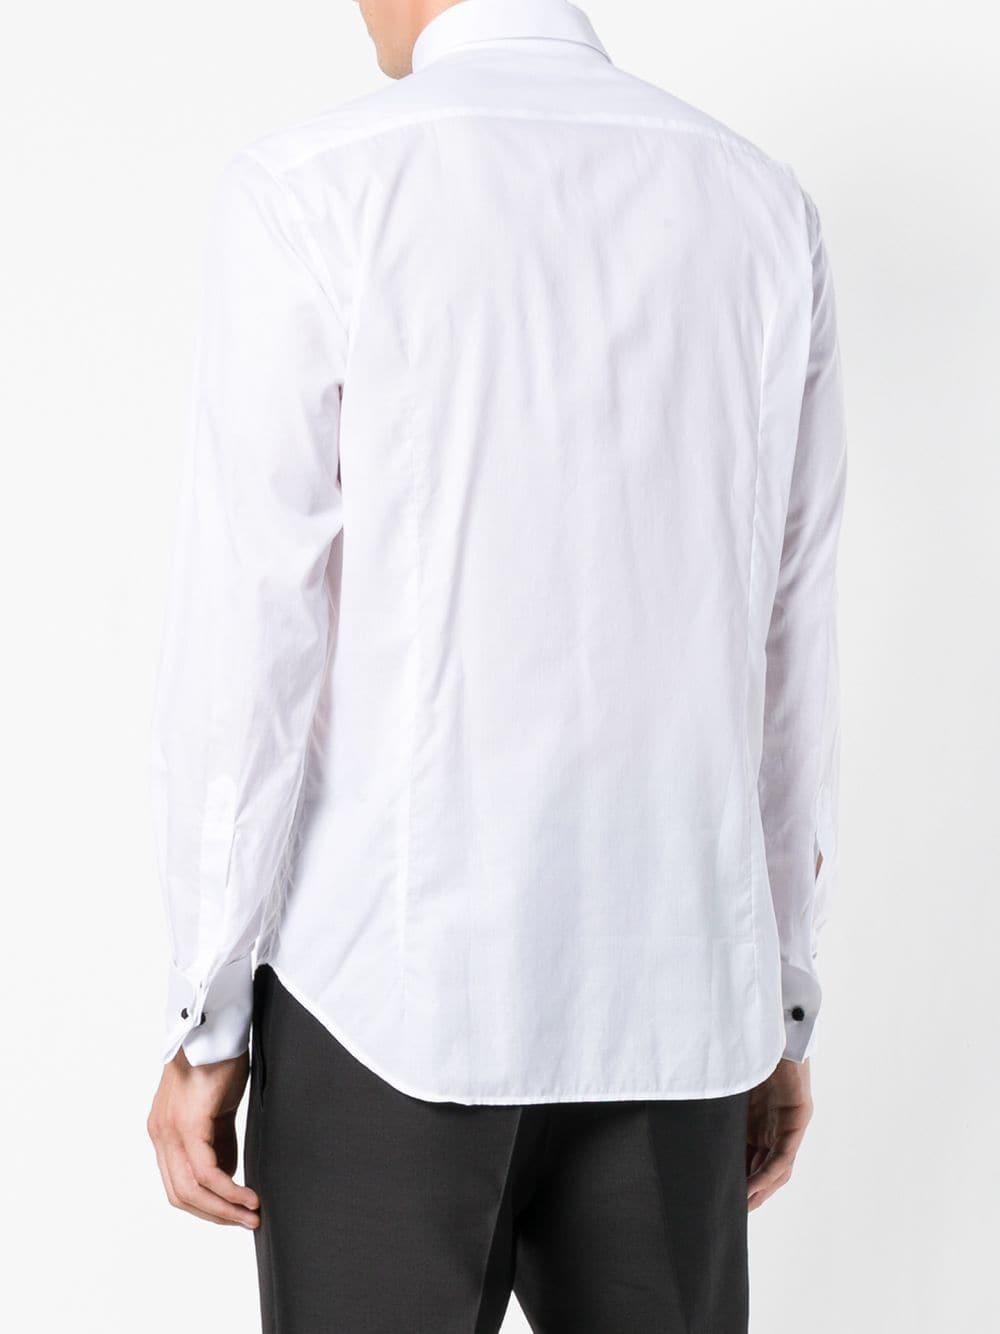 Giorgio Armani Formal Shirt in White for Men - Lyst